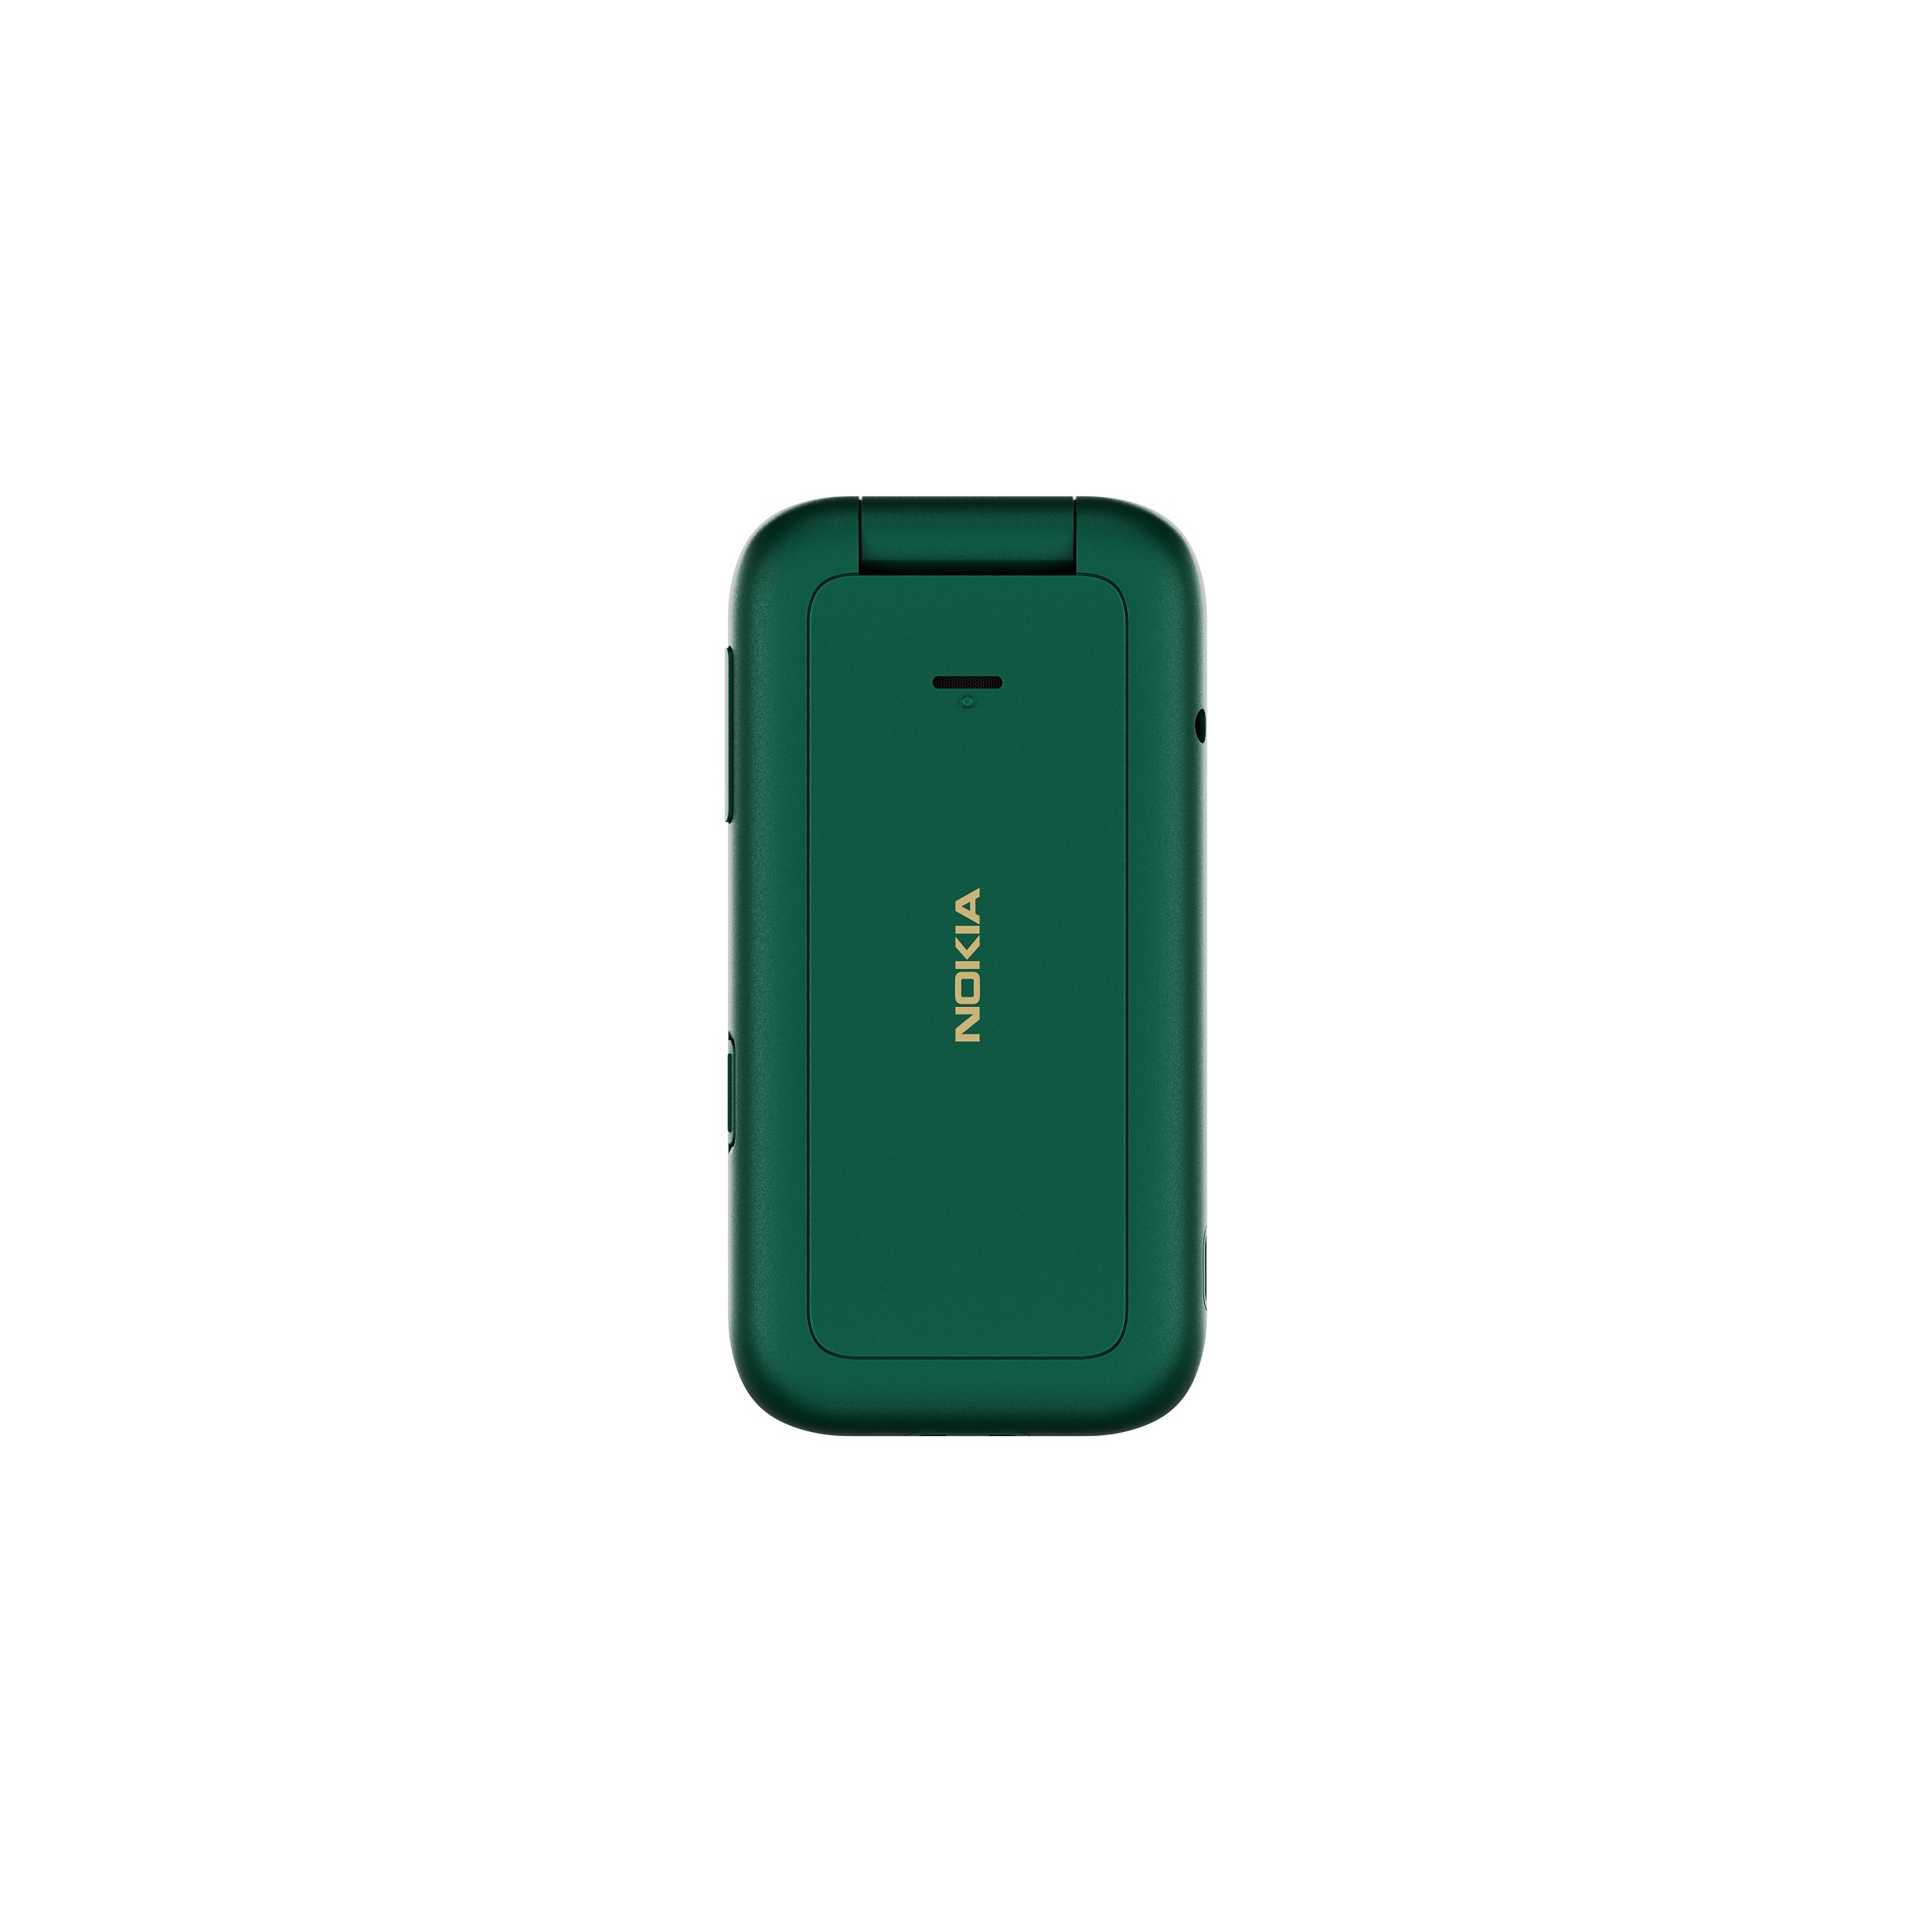 Obrázek Nokia 2660 Flip Dual SIM Lush Green